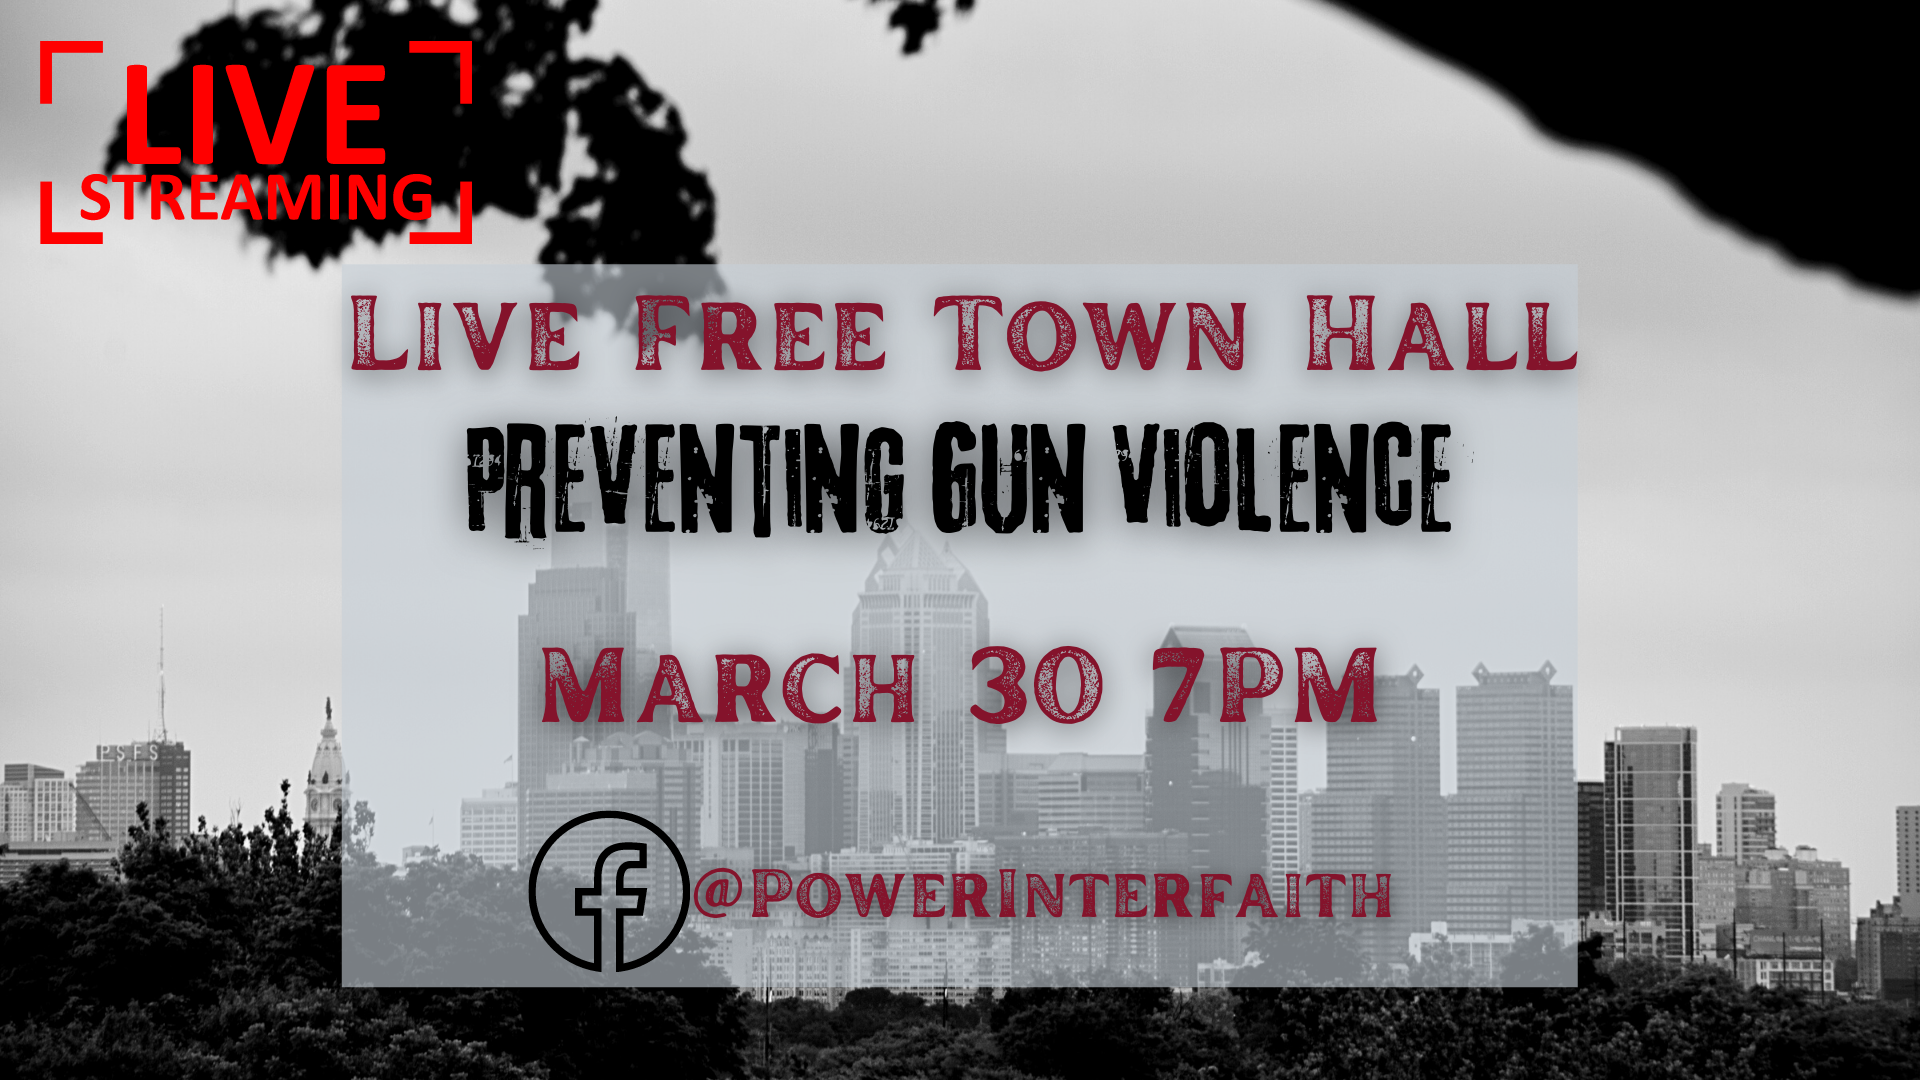 POWER Interfaith's "Live Free" Town Hall